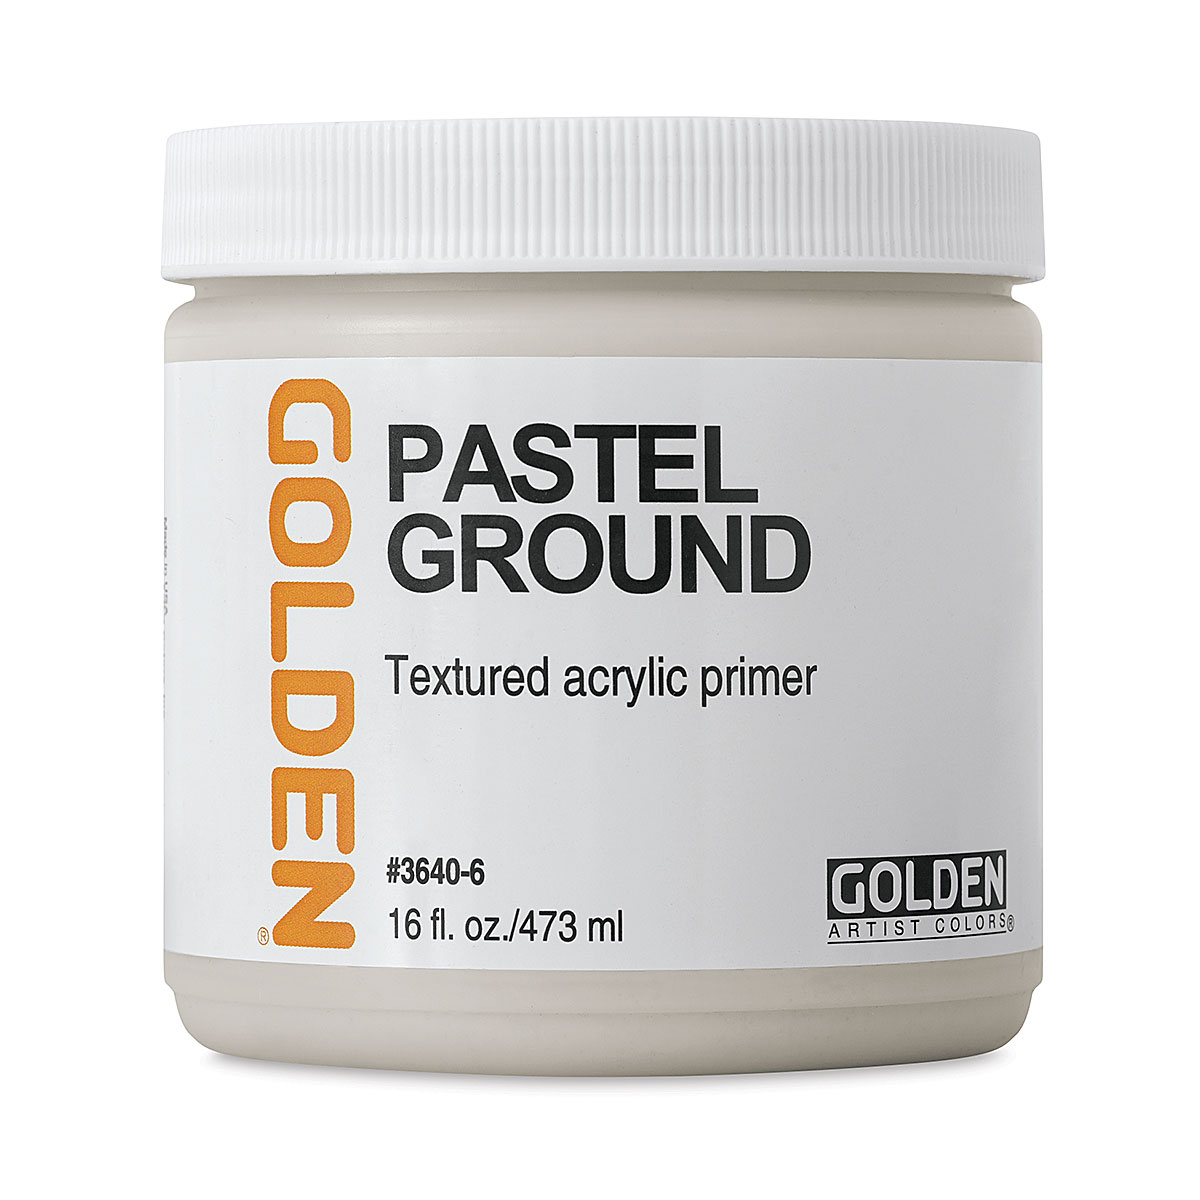 Golden Pastel Ground, Create Vibrant Pastel Art